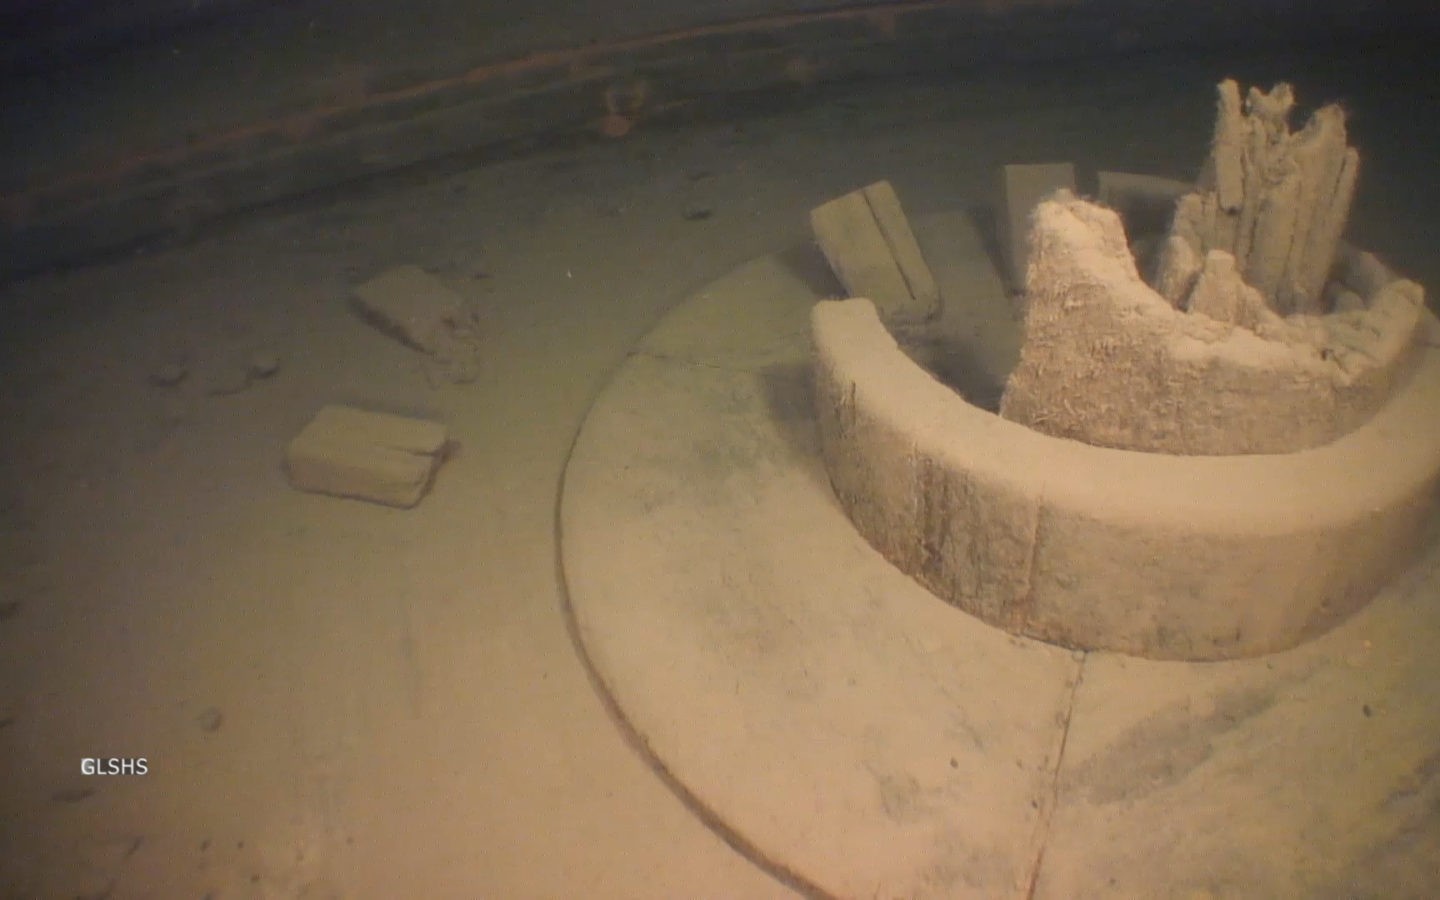 Navio naufragado há 130 anos foi encontrado no Lake Superior, nos Estados Unidos  (Foto: Great Lakes Shipwreck Museum )